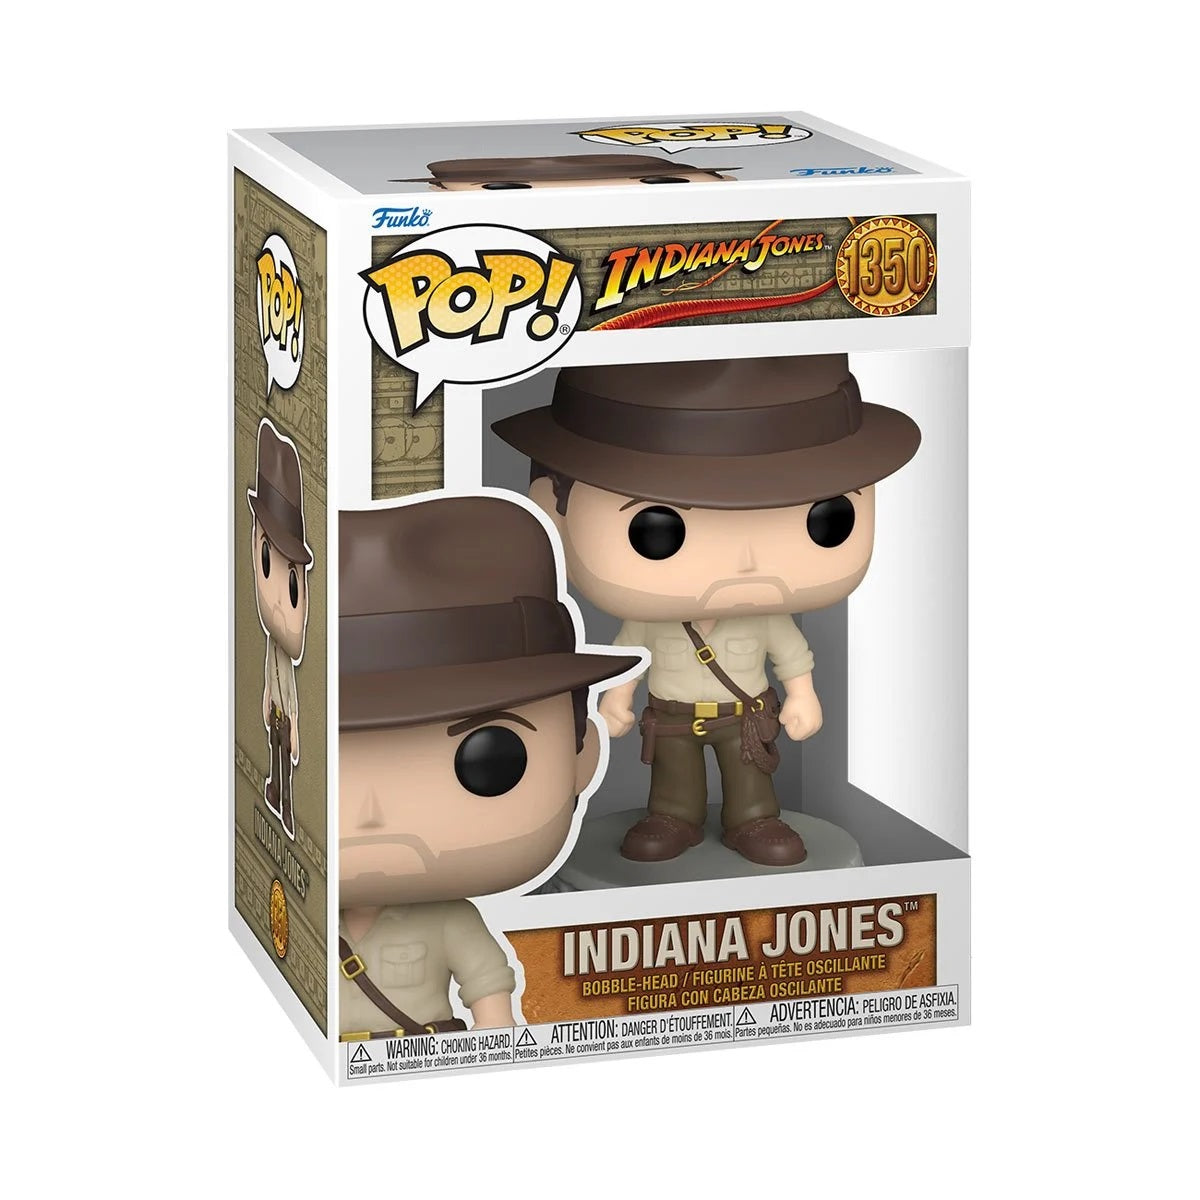 Indiana Jones Raiders of the Lost Ark Pop! Vinyl Figure #1350 - Iconic Adventure Awaits